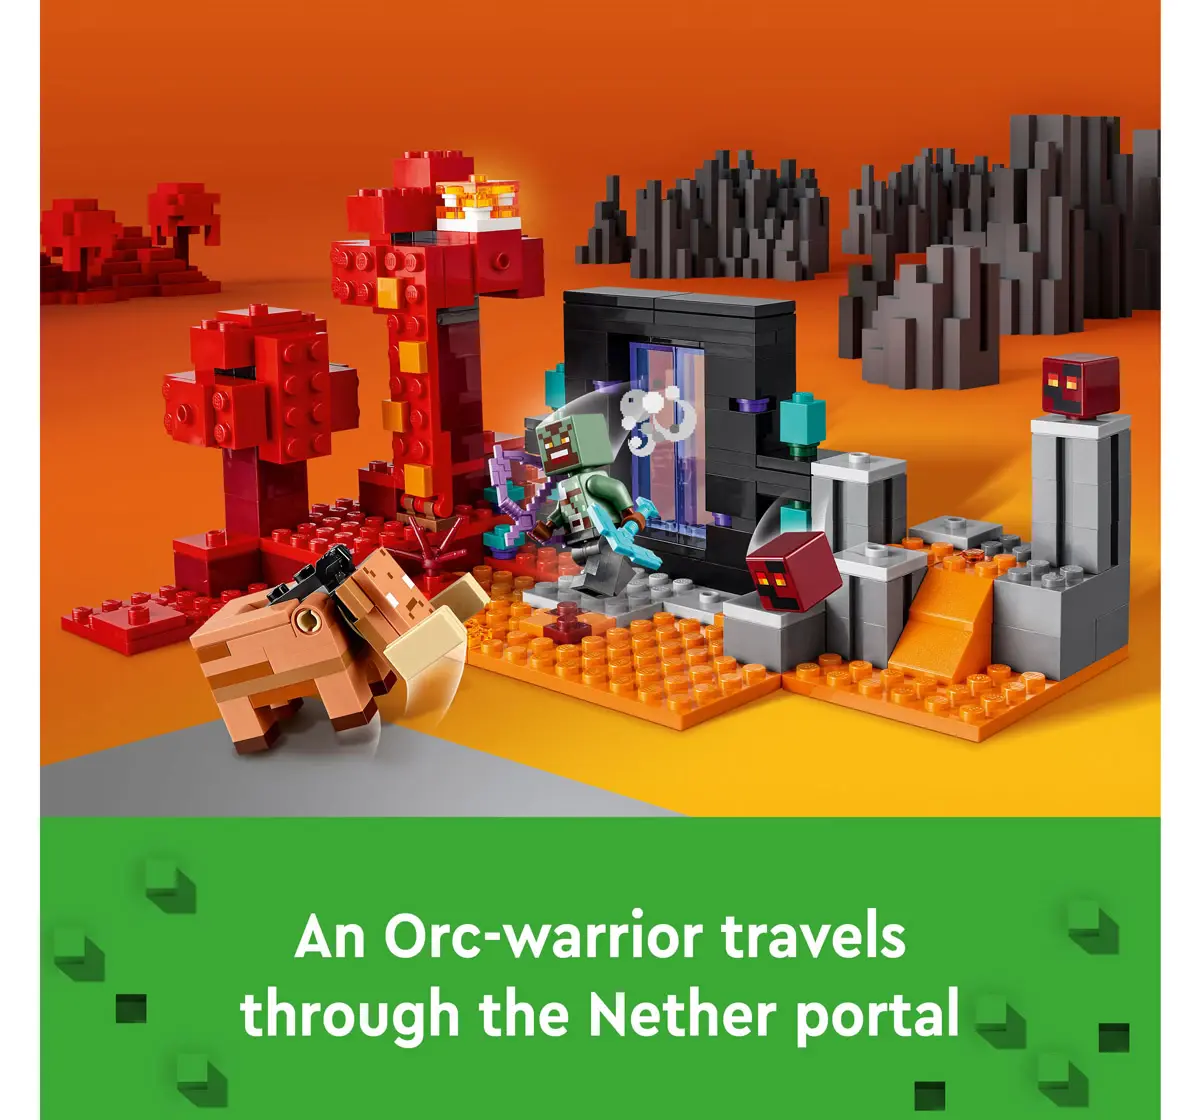 Lego Minecraft The Nether Portal Ambush 21255 Multicolour For Kids Ages 8Y+ (352 Pieces) 